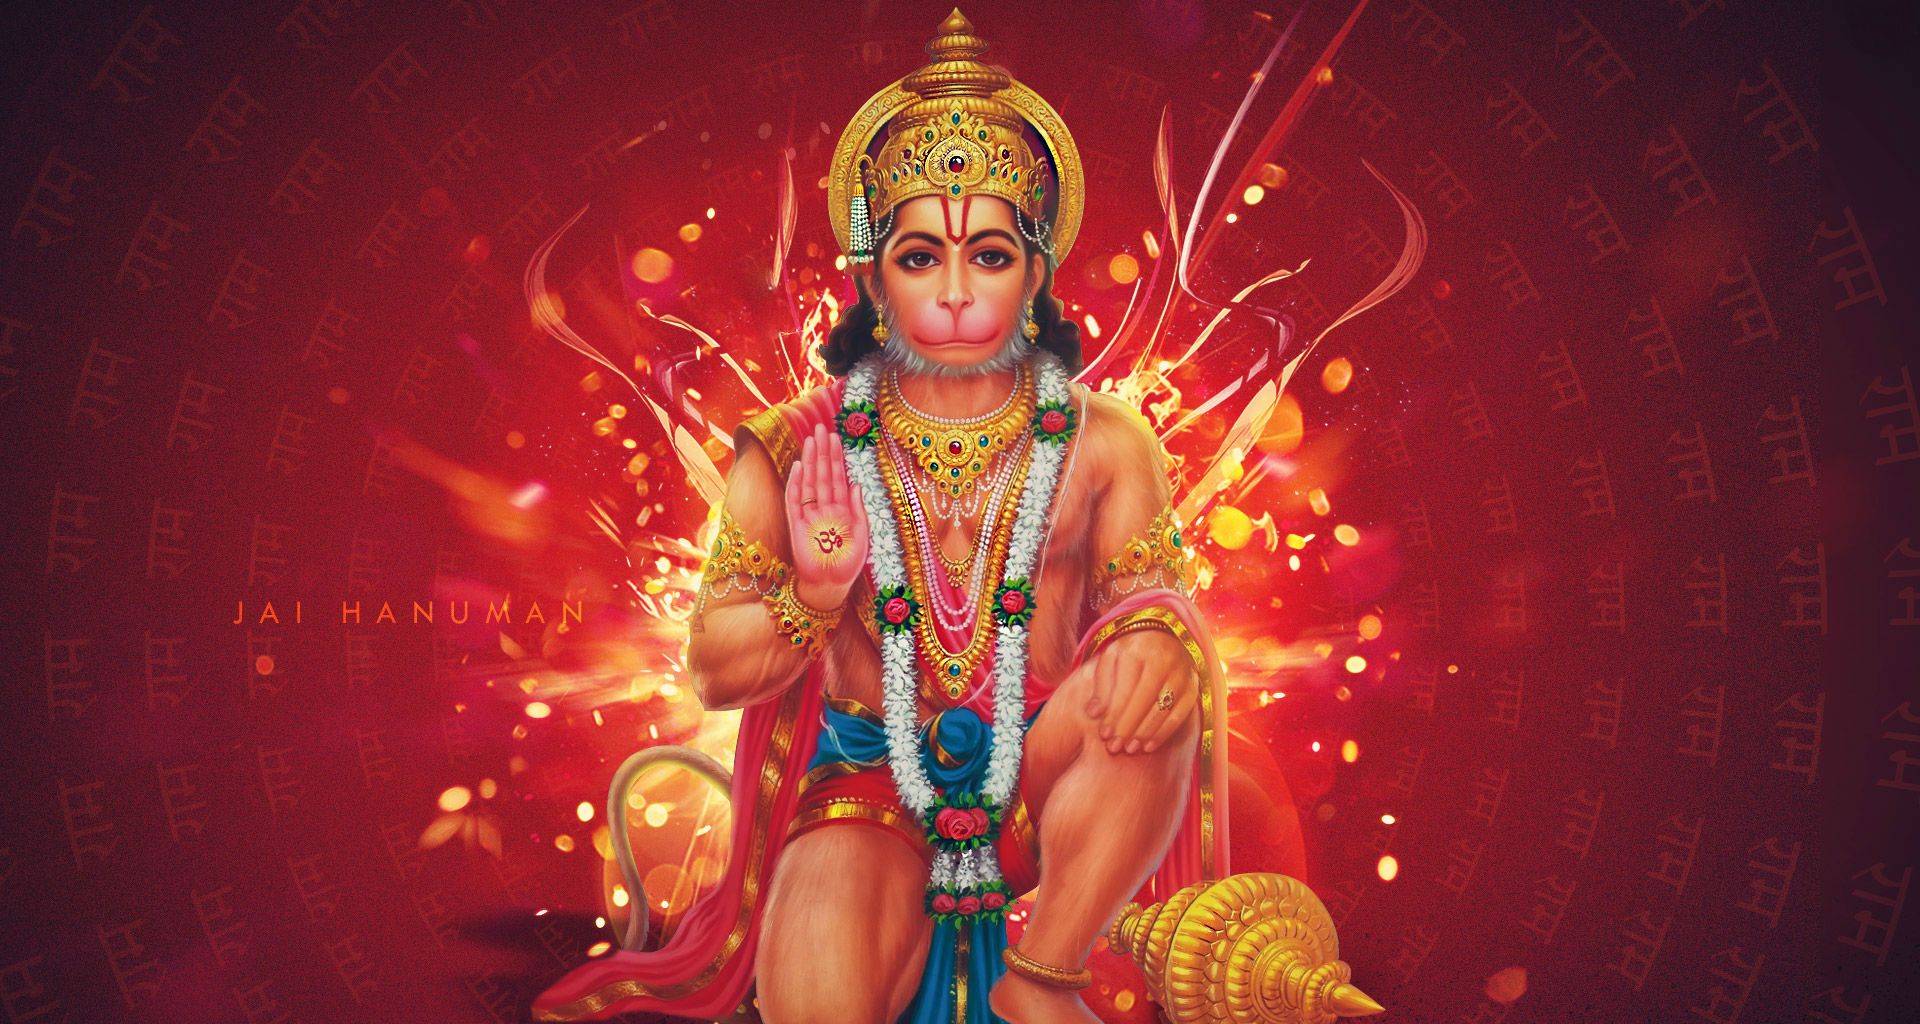 Hanuman Desktop Wallpapers - Top Những Hình Ảnh Đẹp